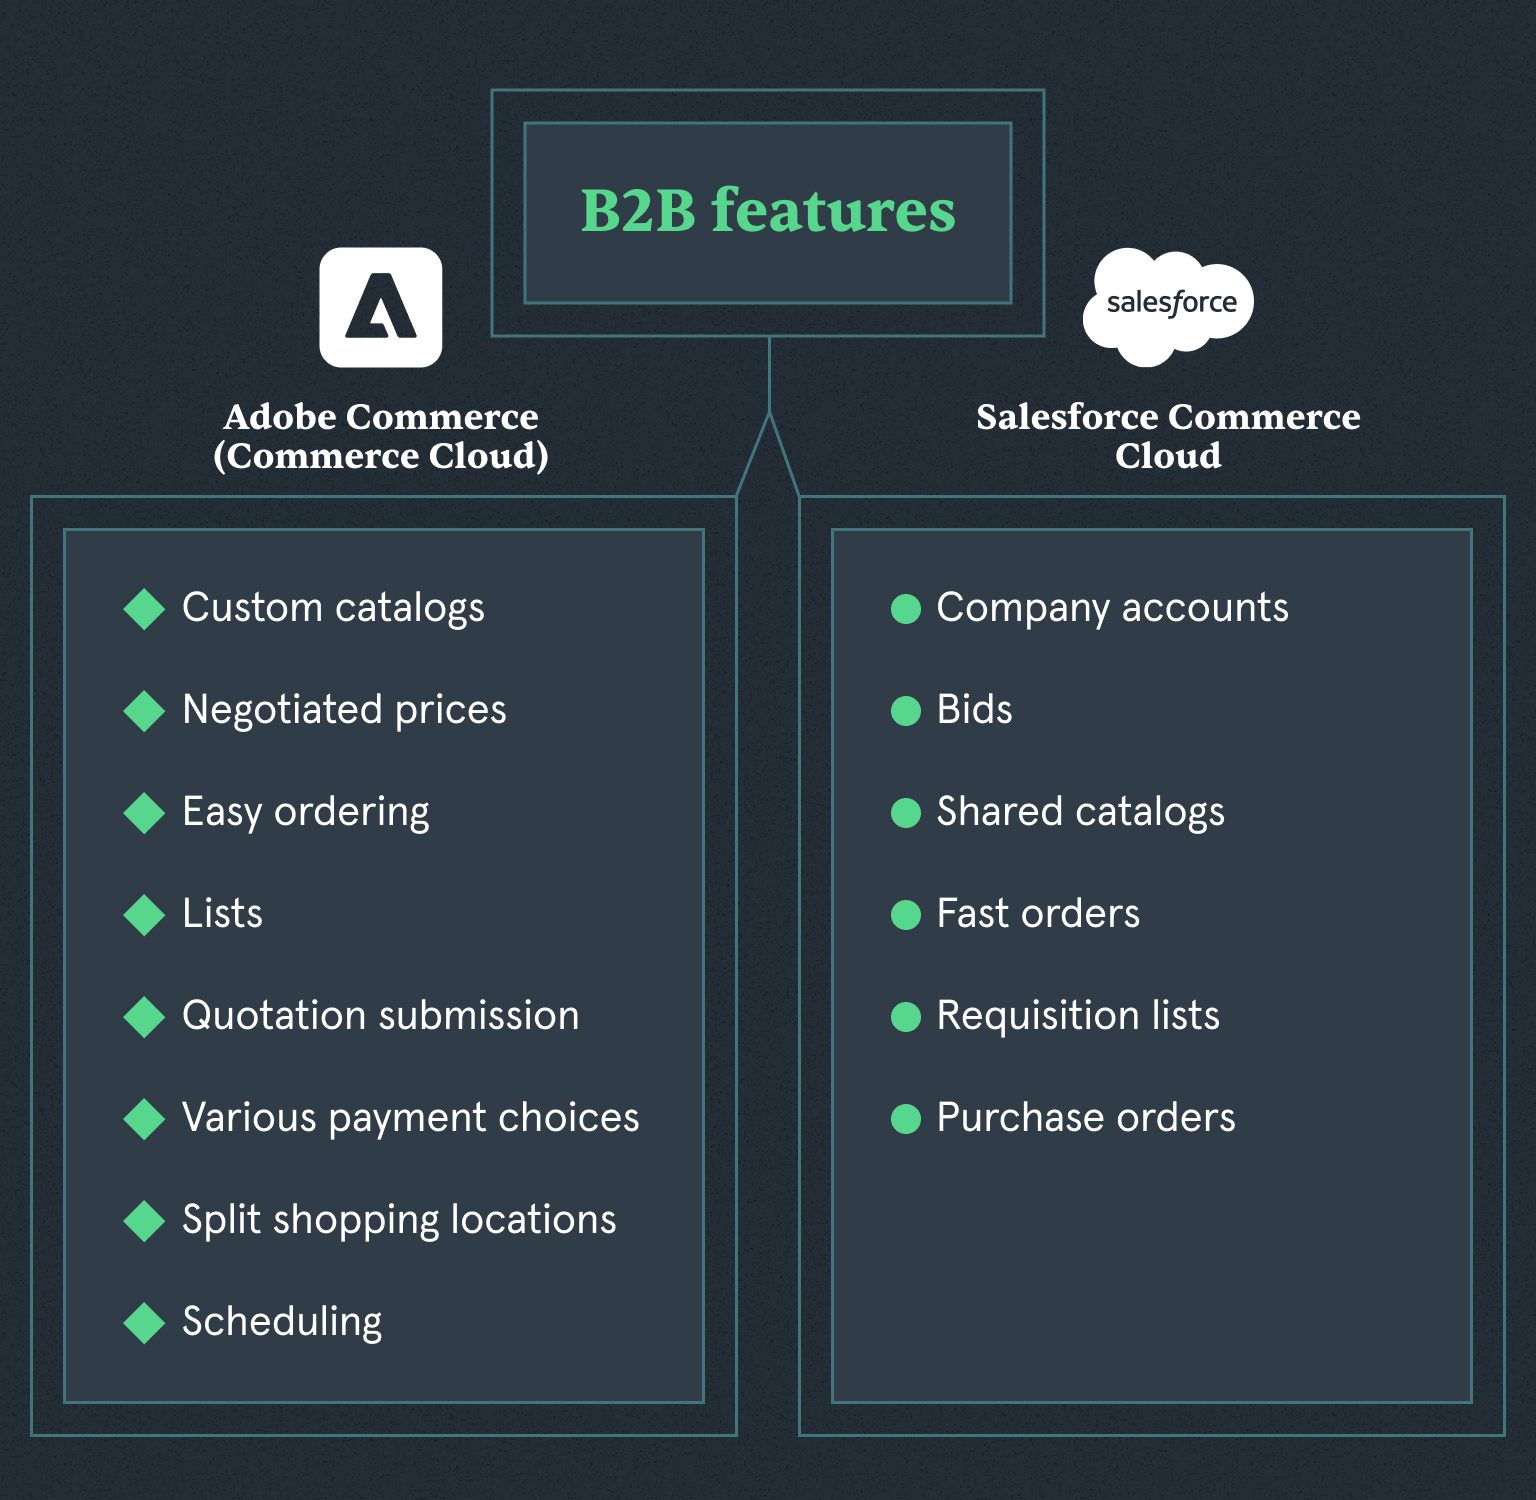 B2B Features of Adobe Commerce vs Salesforce Commerce Cloud